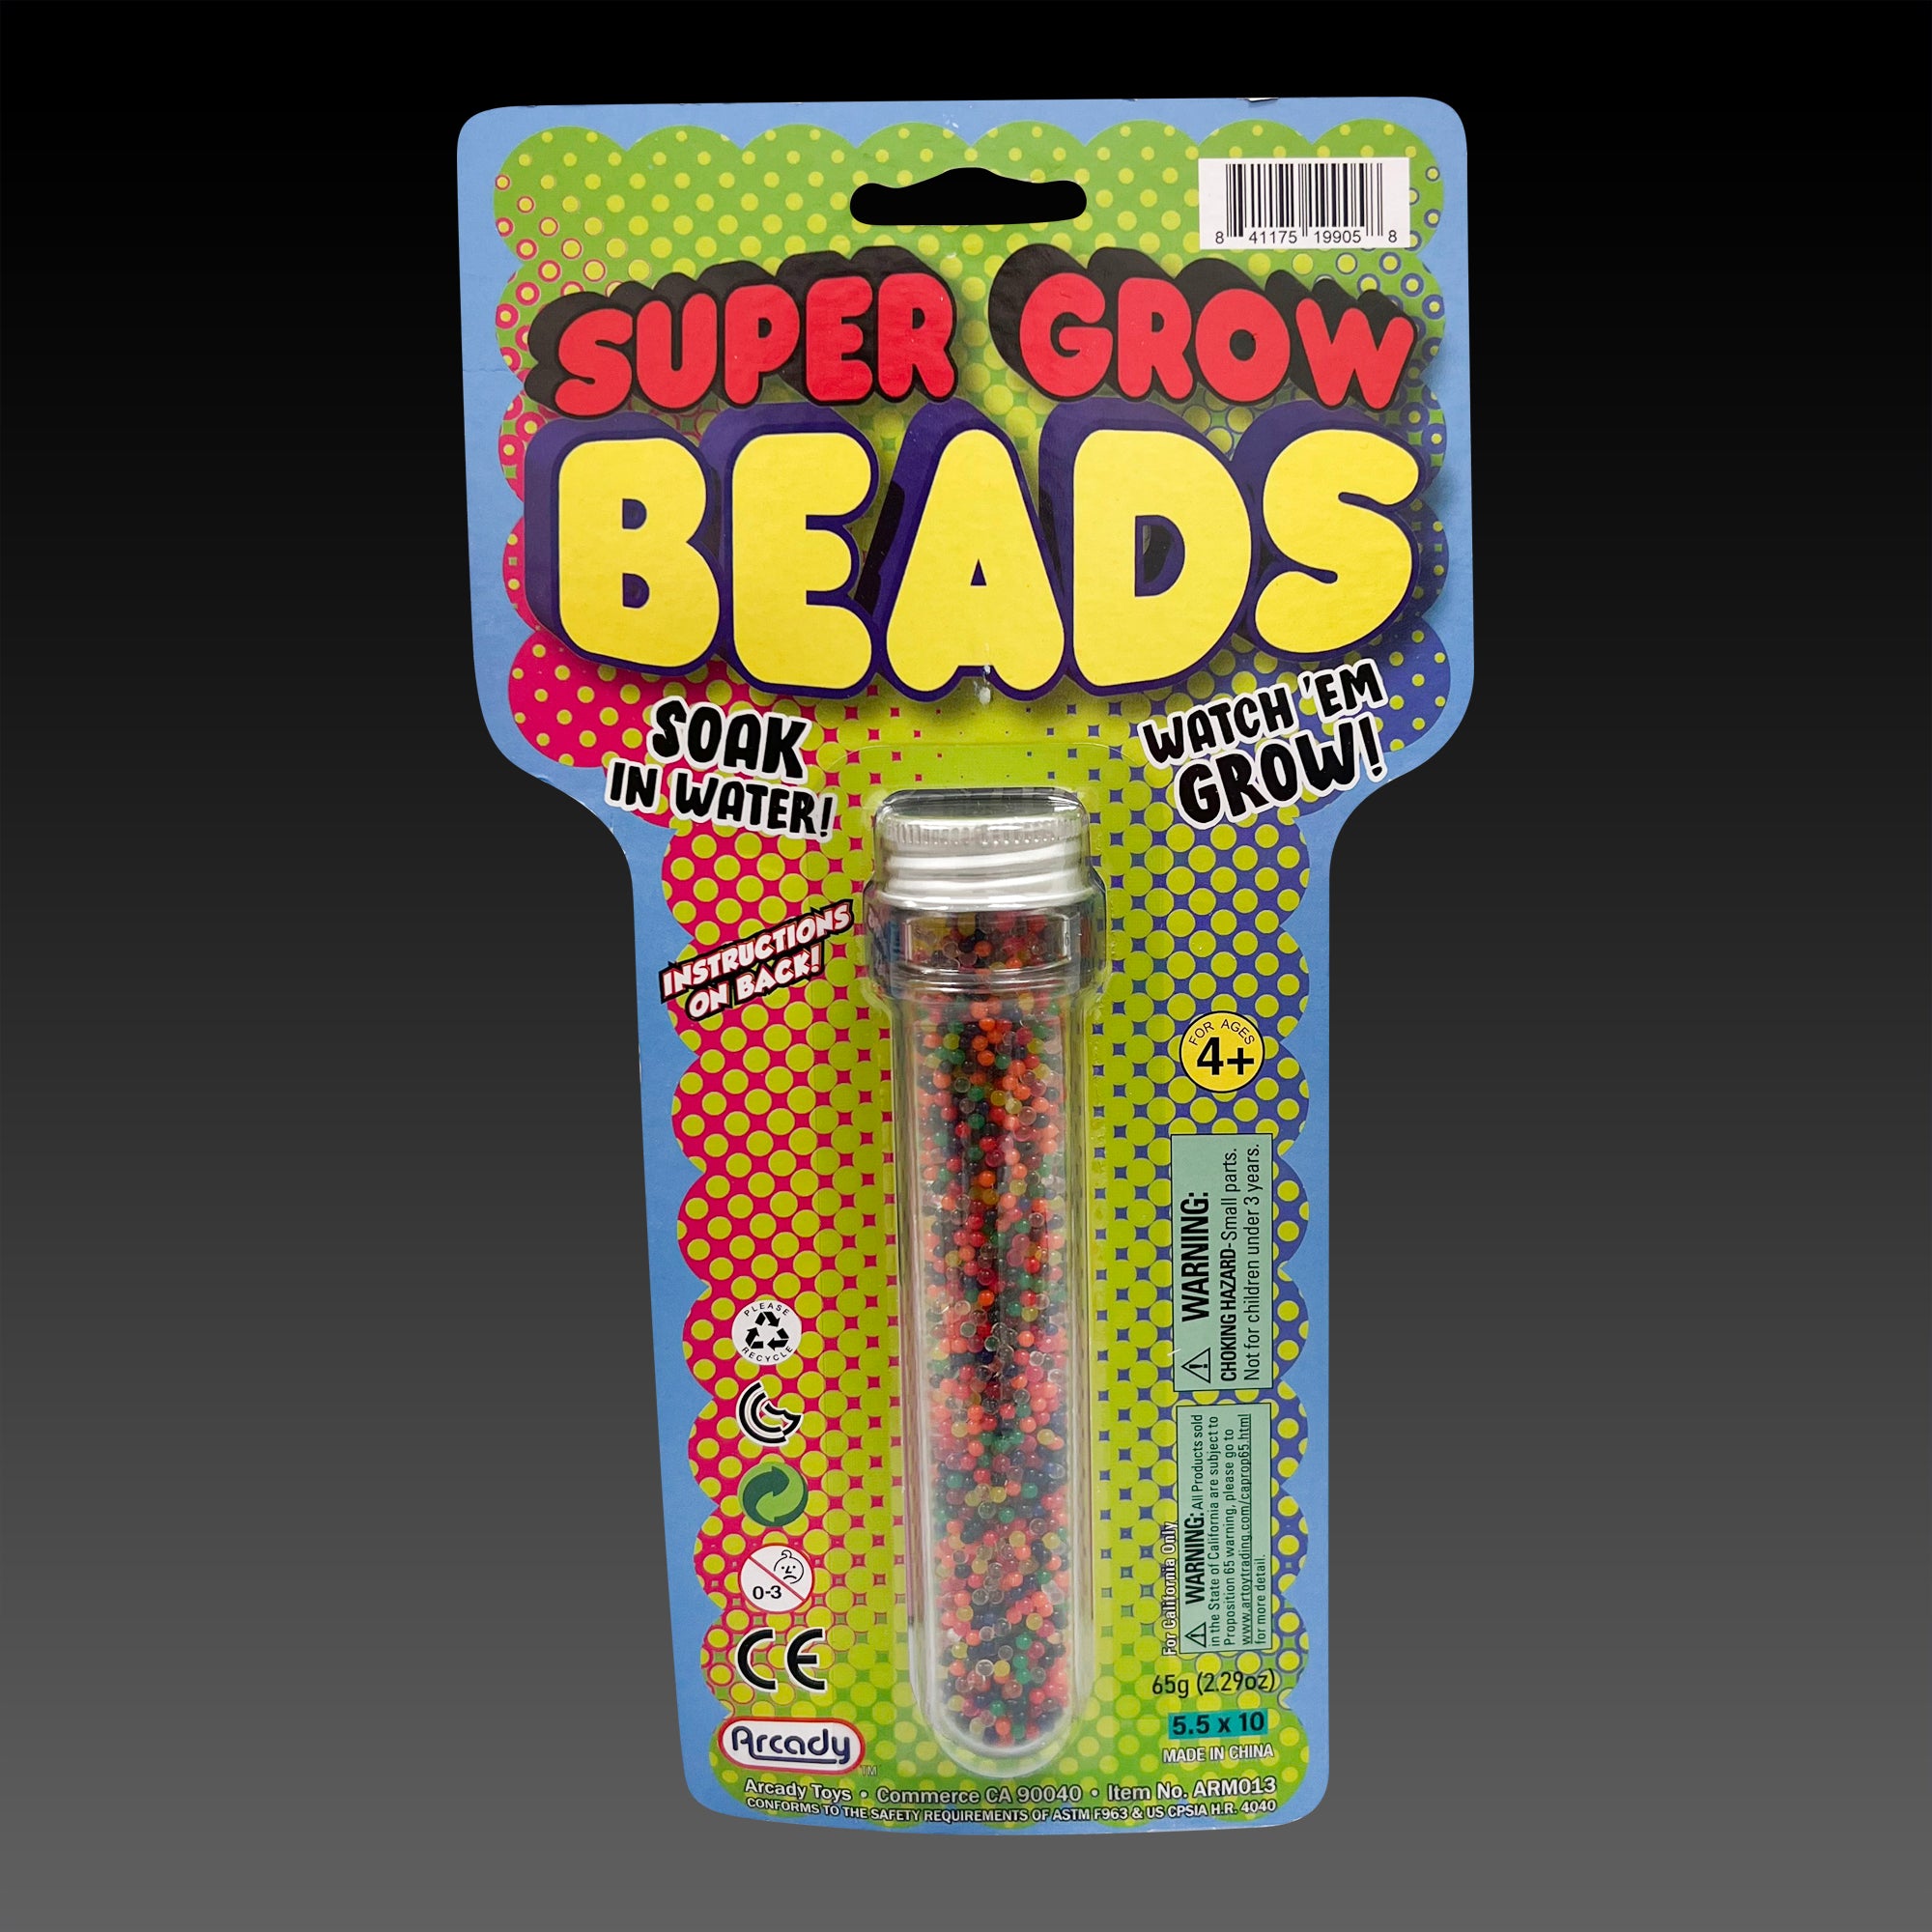 Super Grow Beads